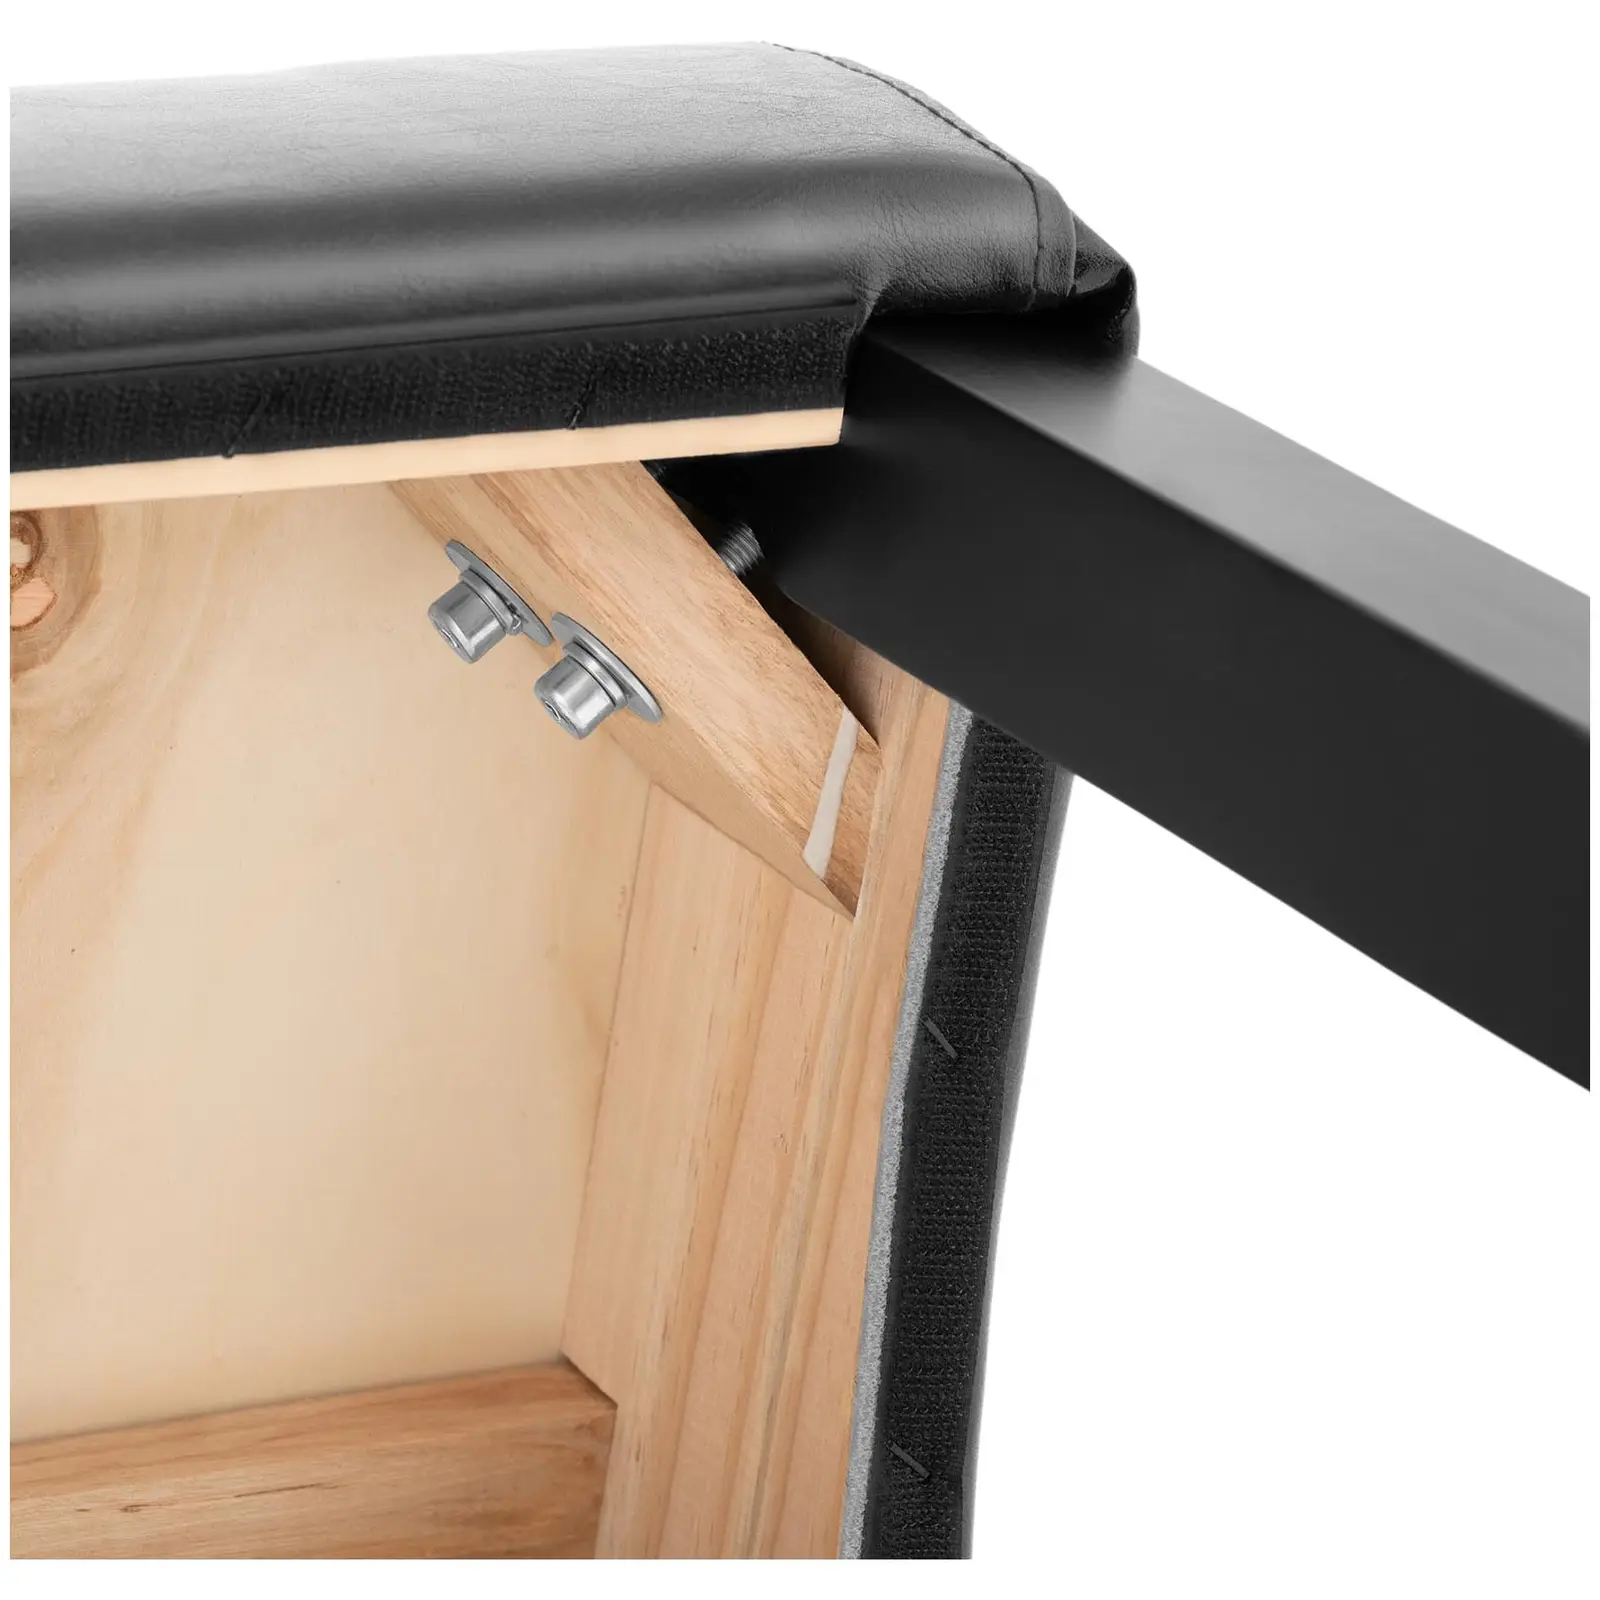 Oblazinjen stol - komplet 2 - do 180 kg - sedež 44,5 x 44 cm - črn